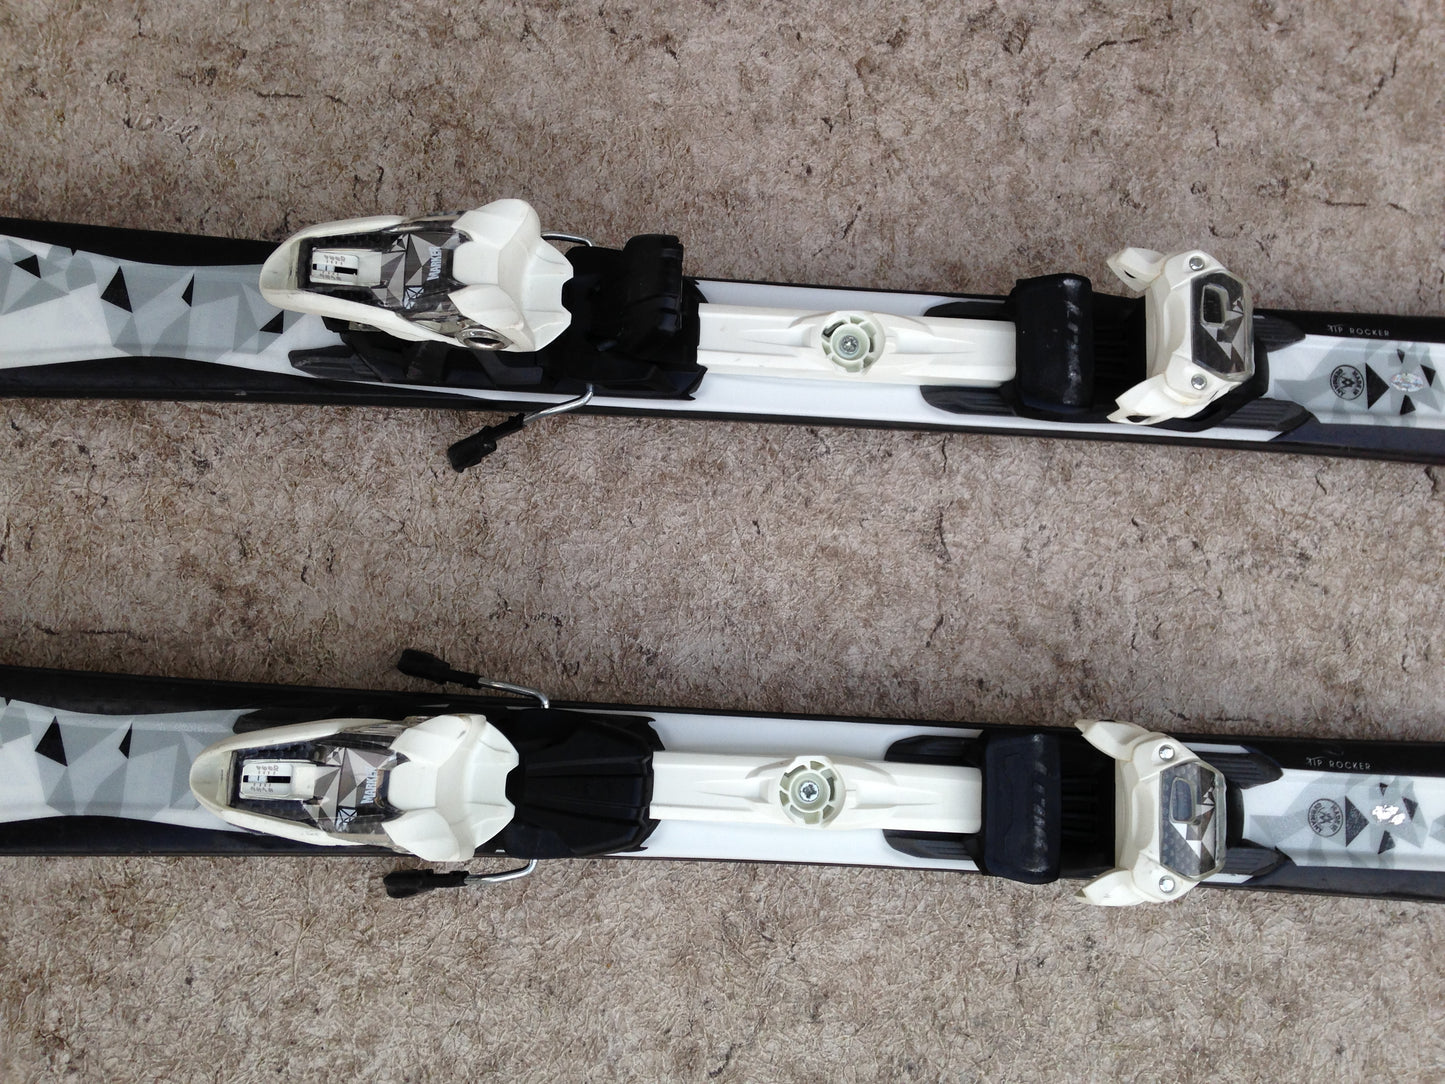 Ski 147 Volki Parabolic Black White Grey With Bindings